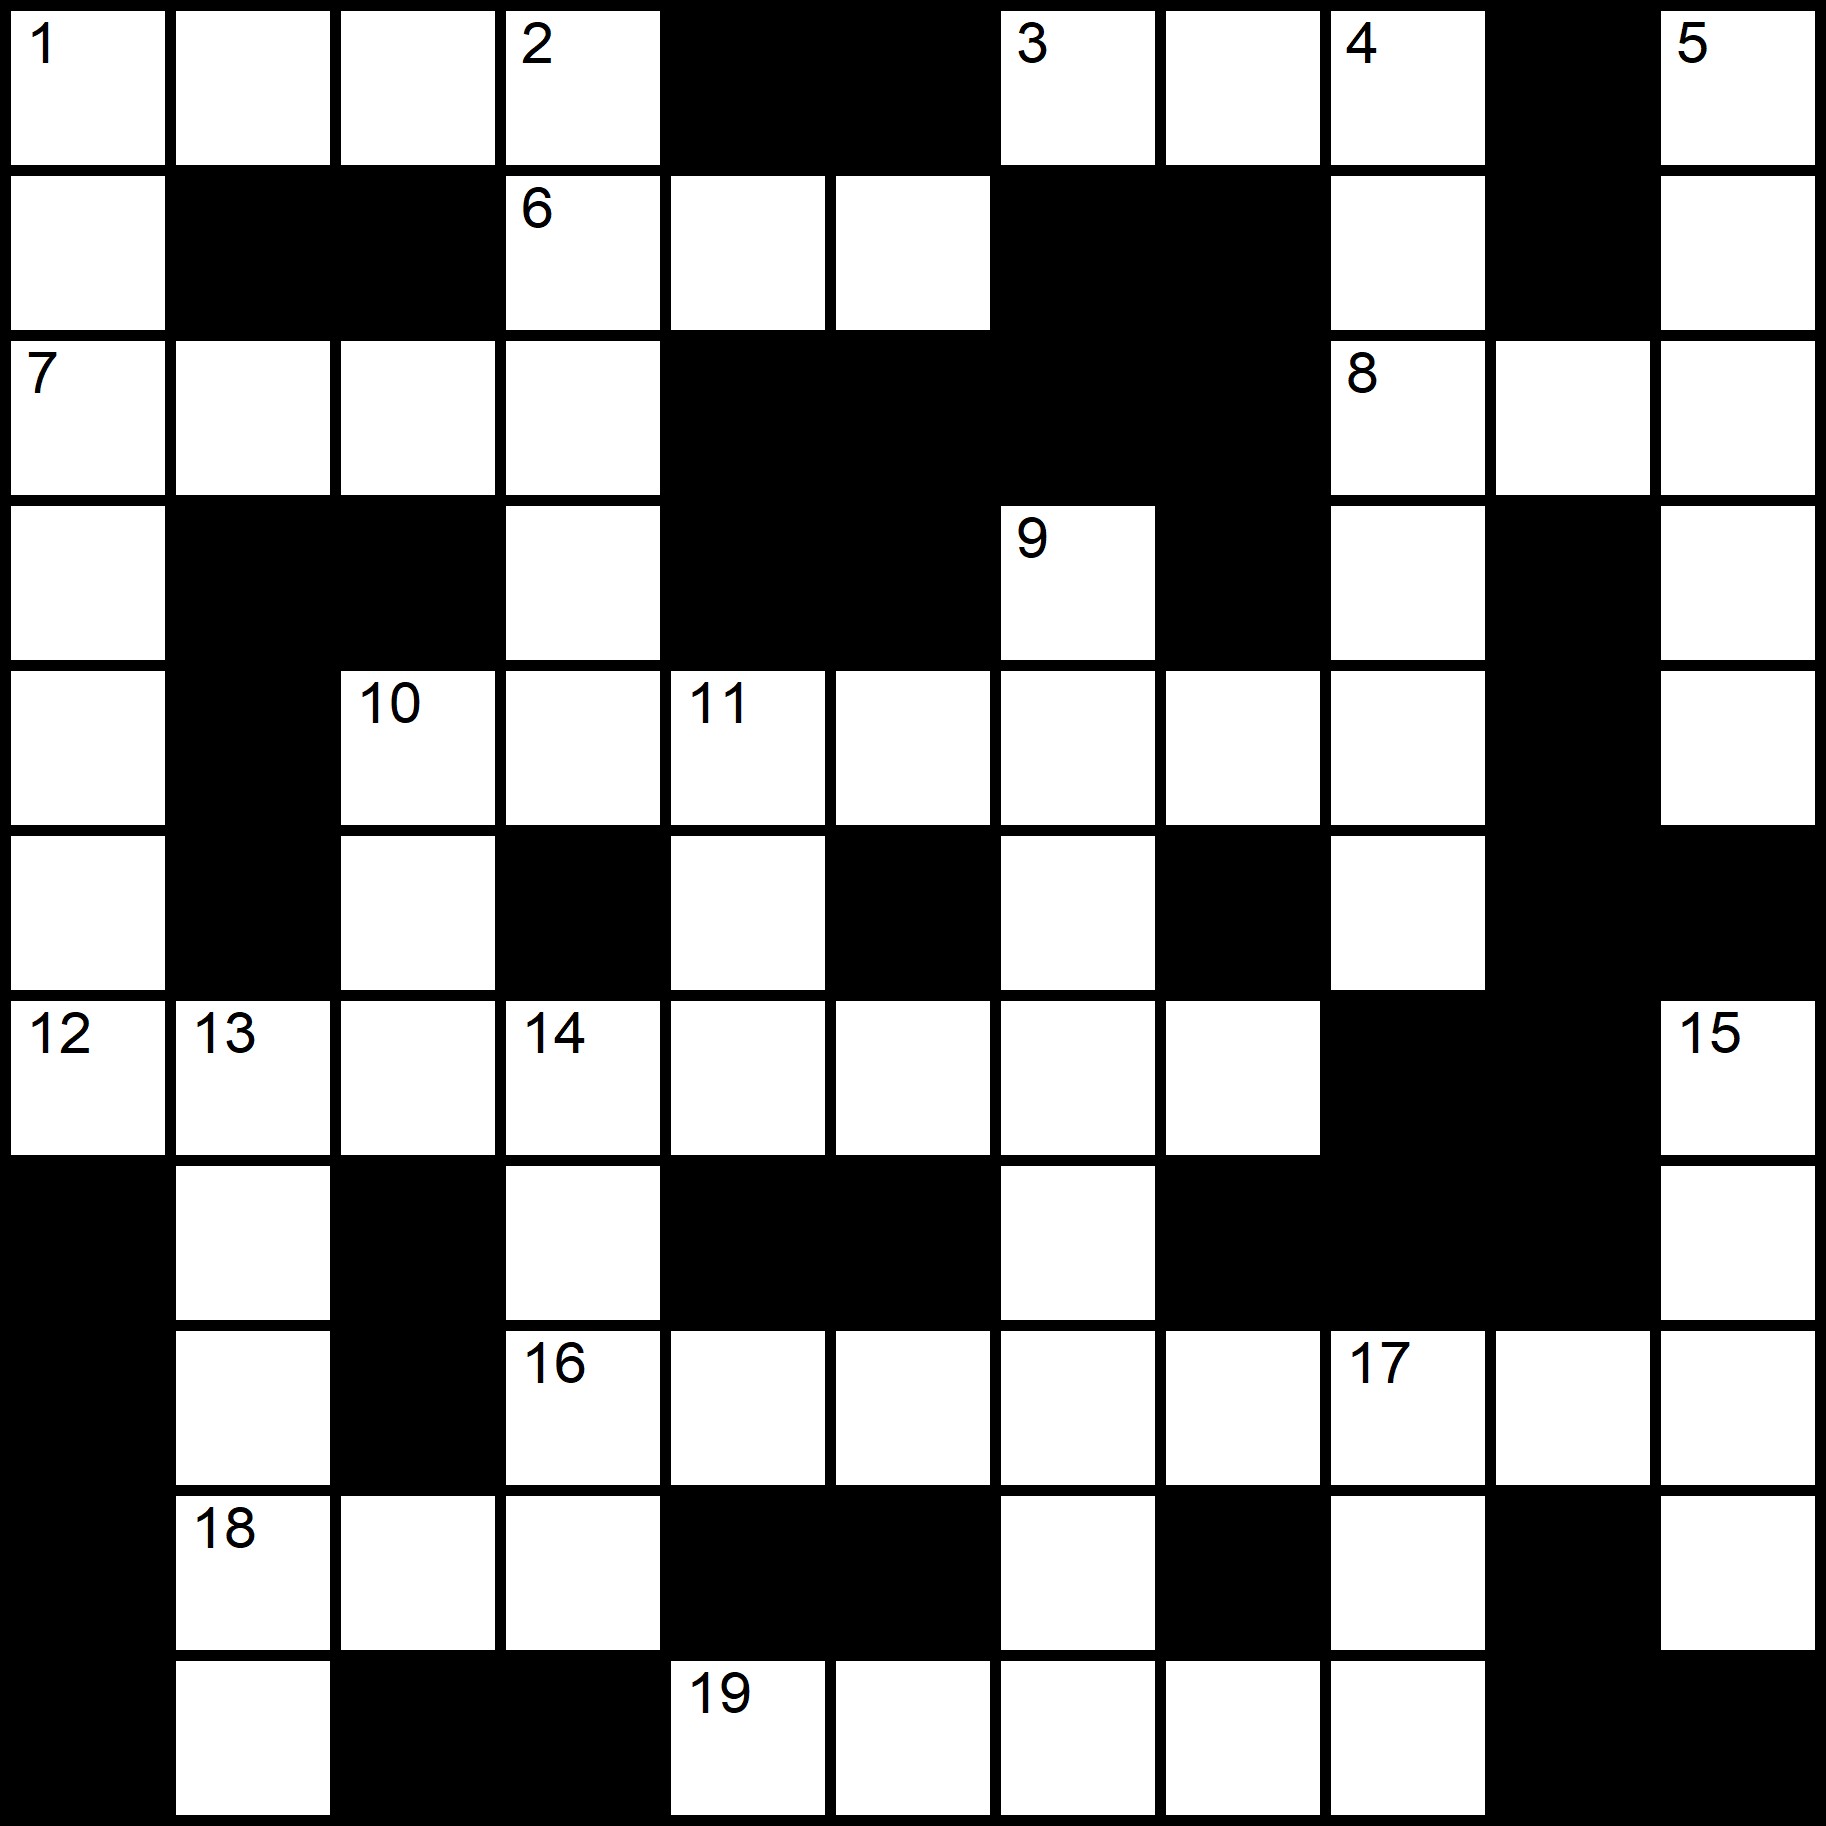 Free Easy Crosswords For Printing -
Placidus Flora - Crossword number twenty-eight